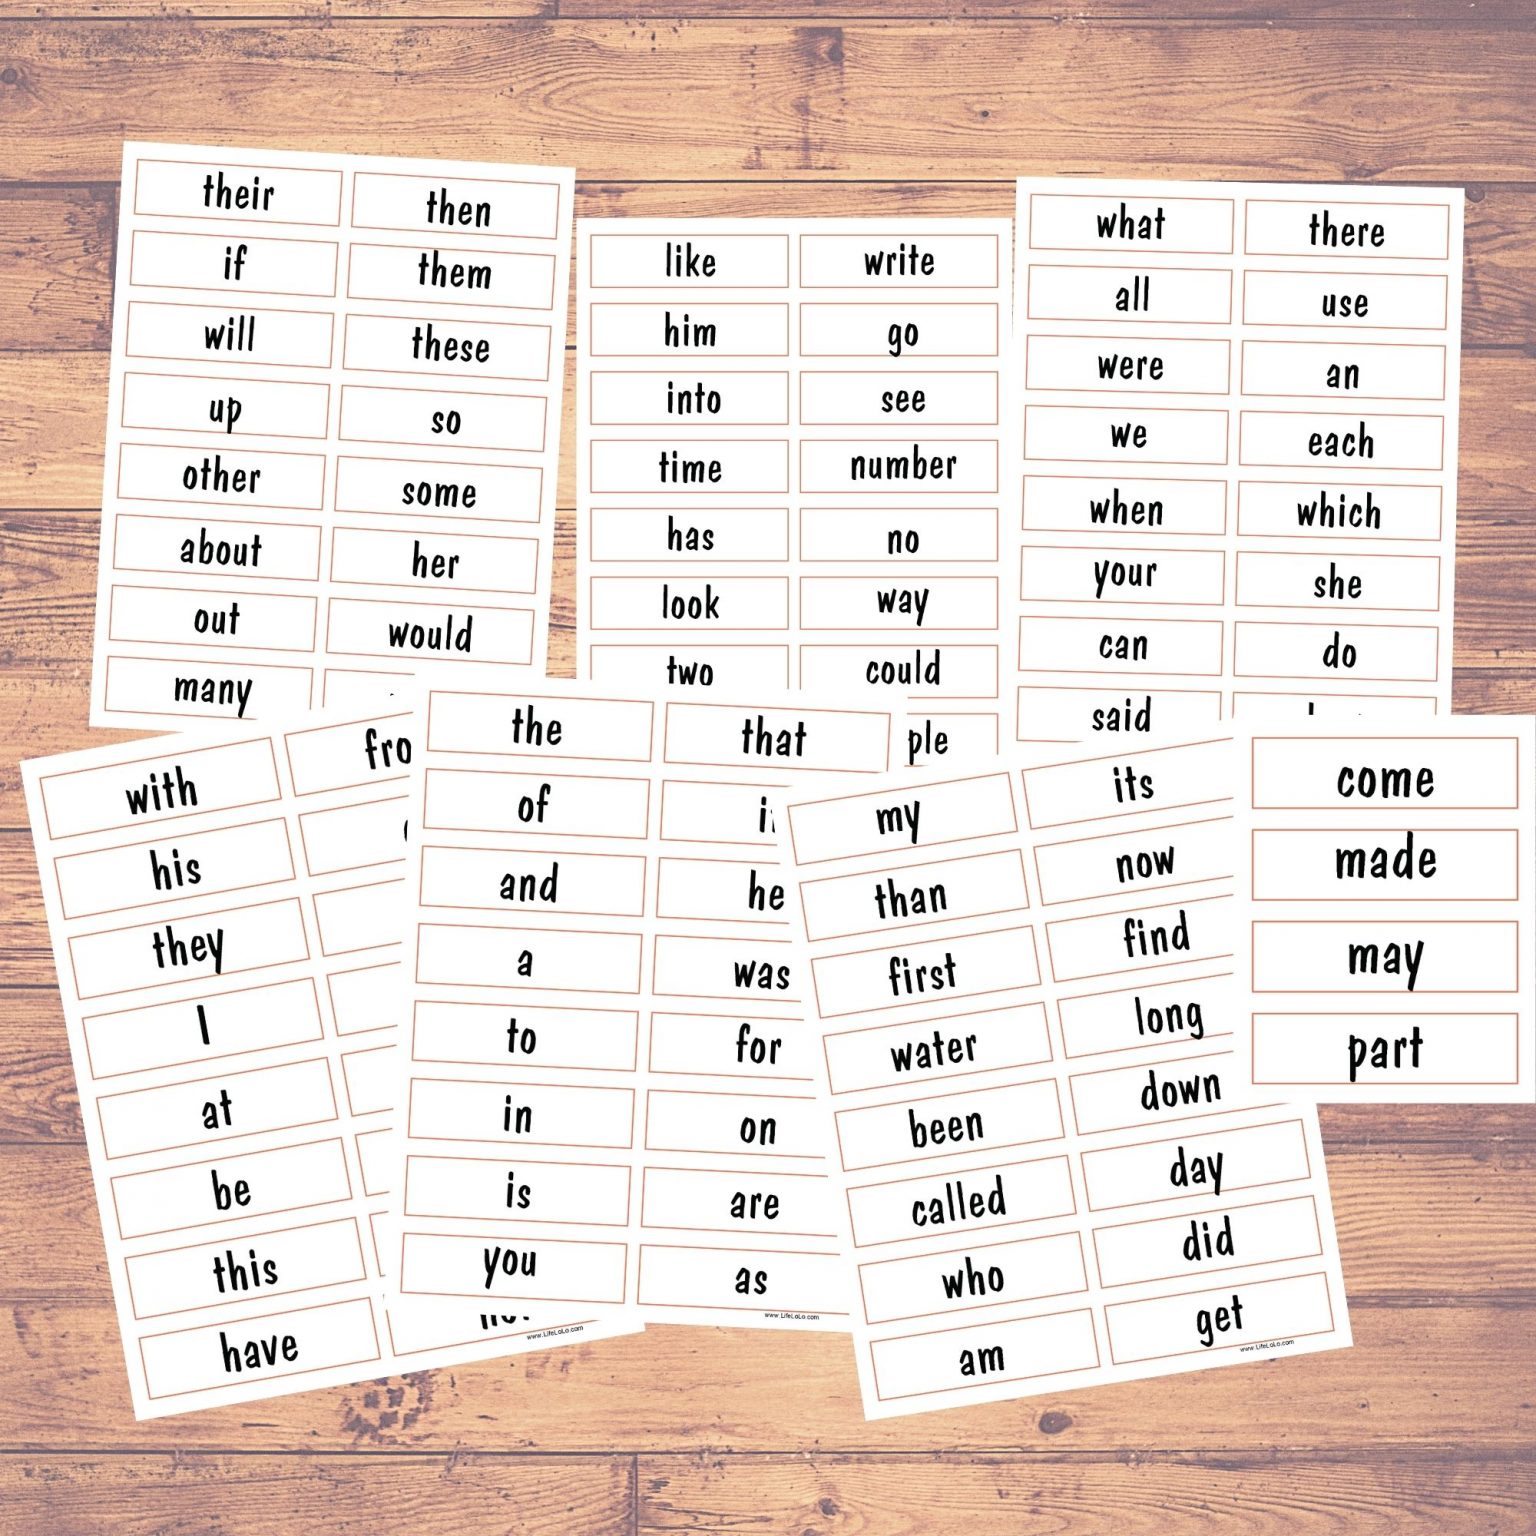 100 FRY Sight Words Builder Game Language Writing Skills 